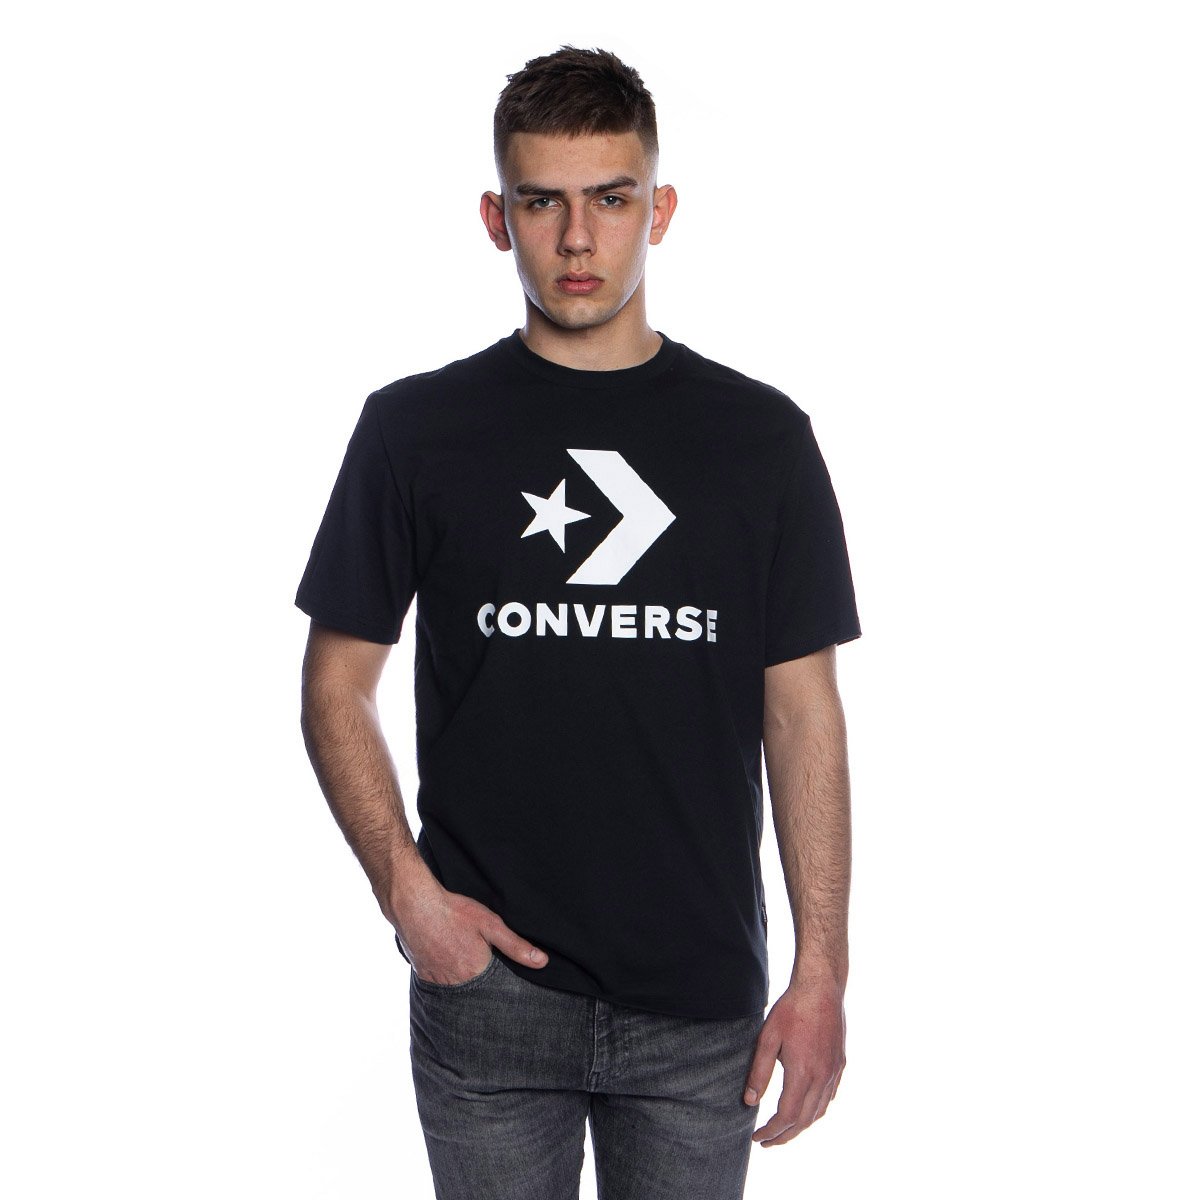 converse t shirt black